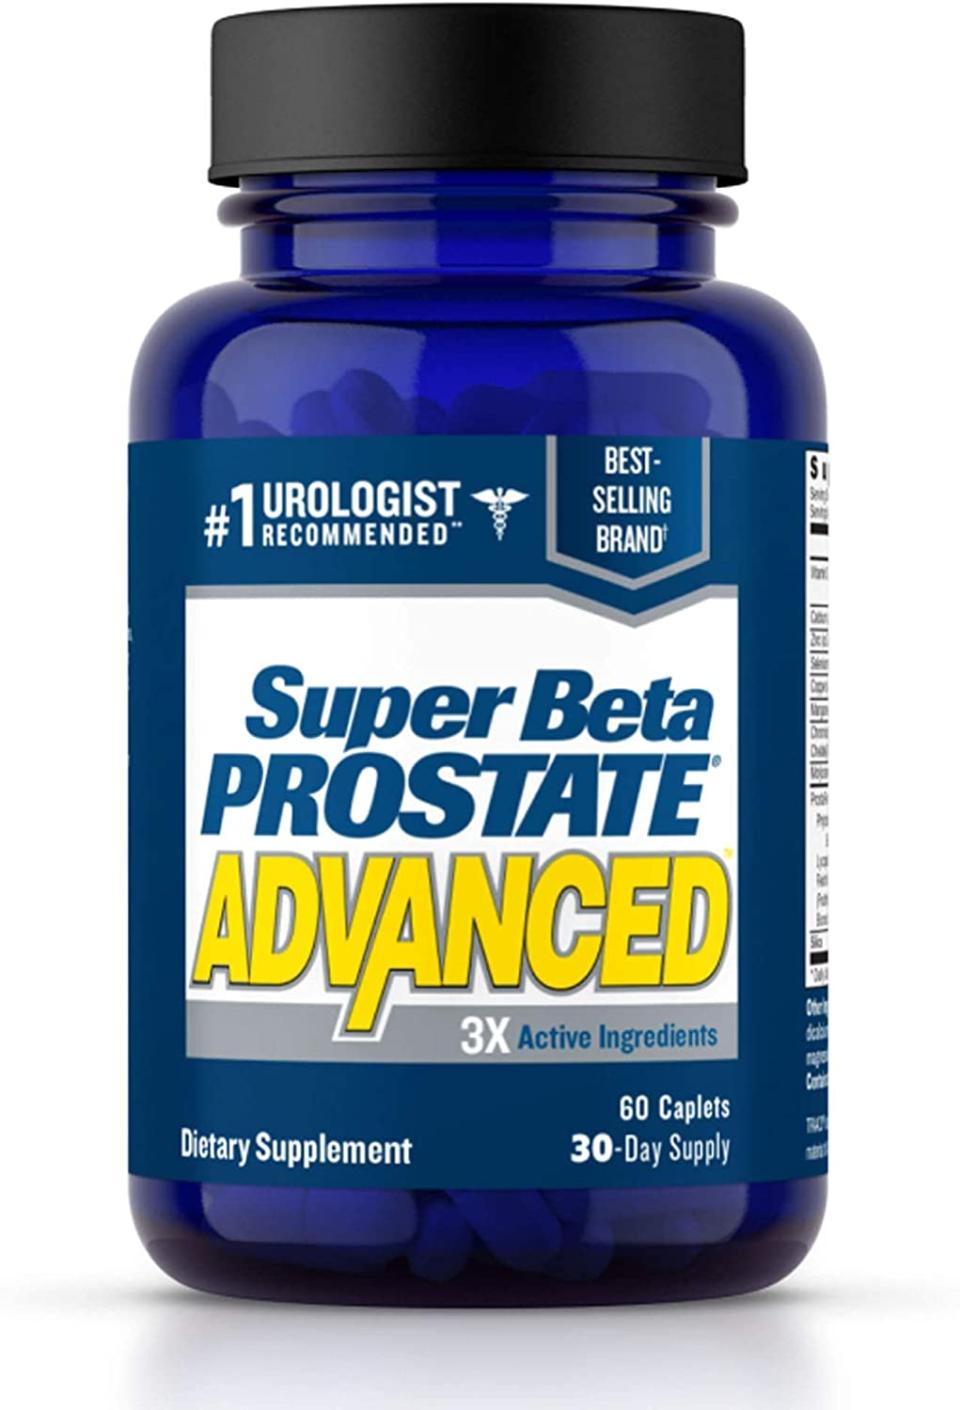 Super Beta Prostate Advanced Prostate Supplement